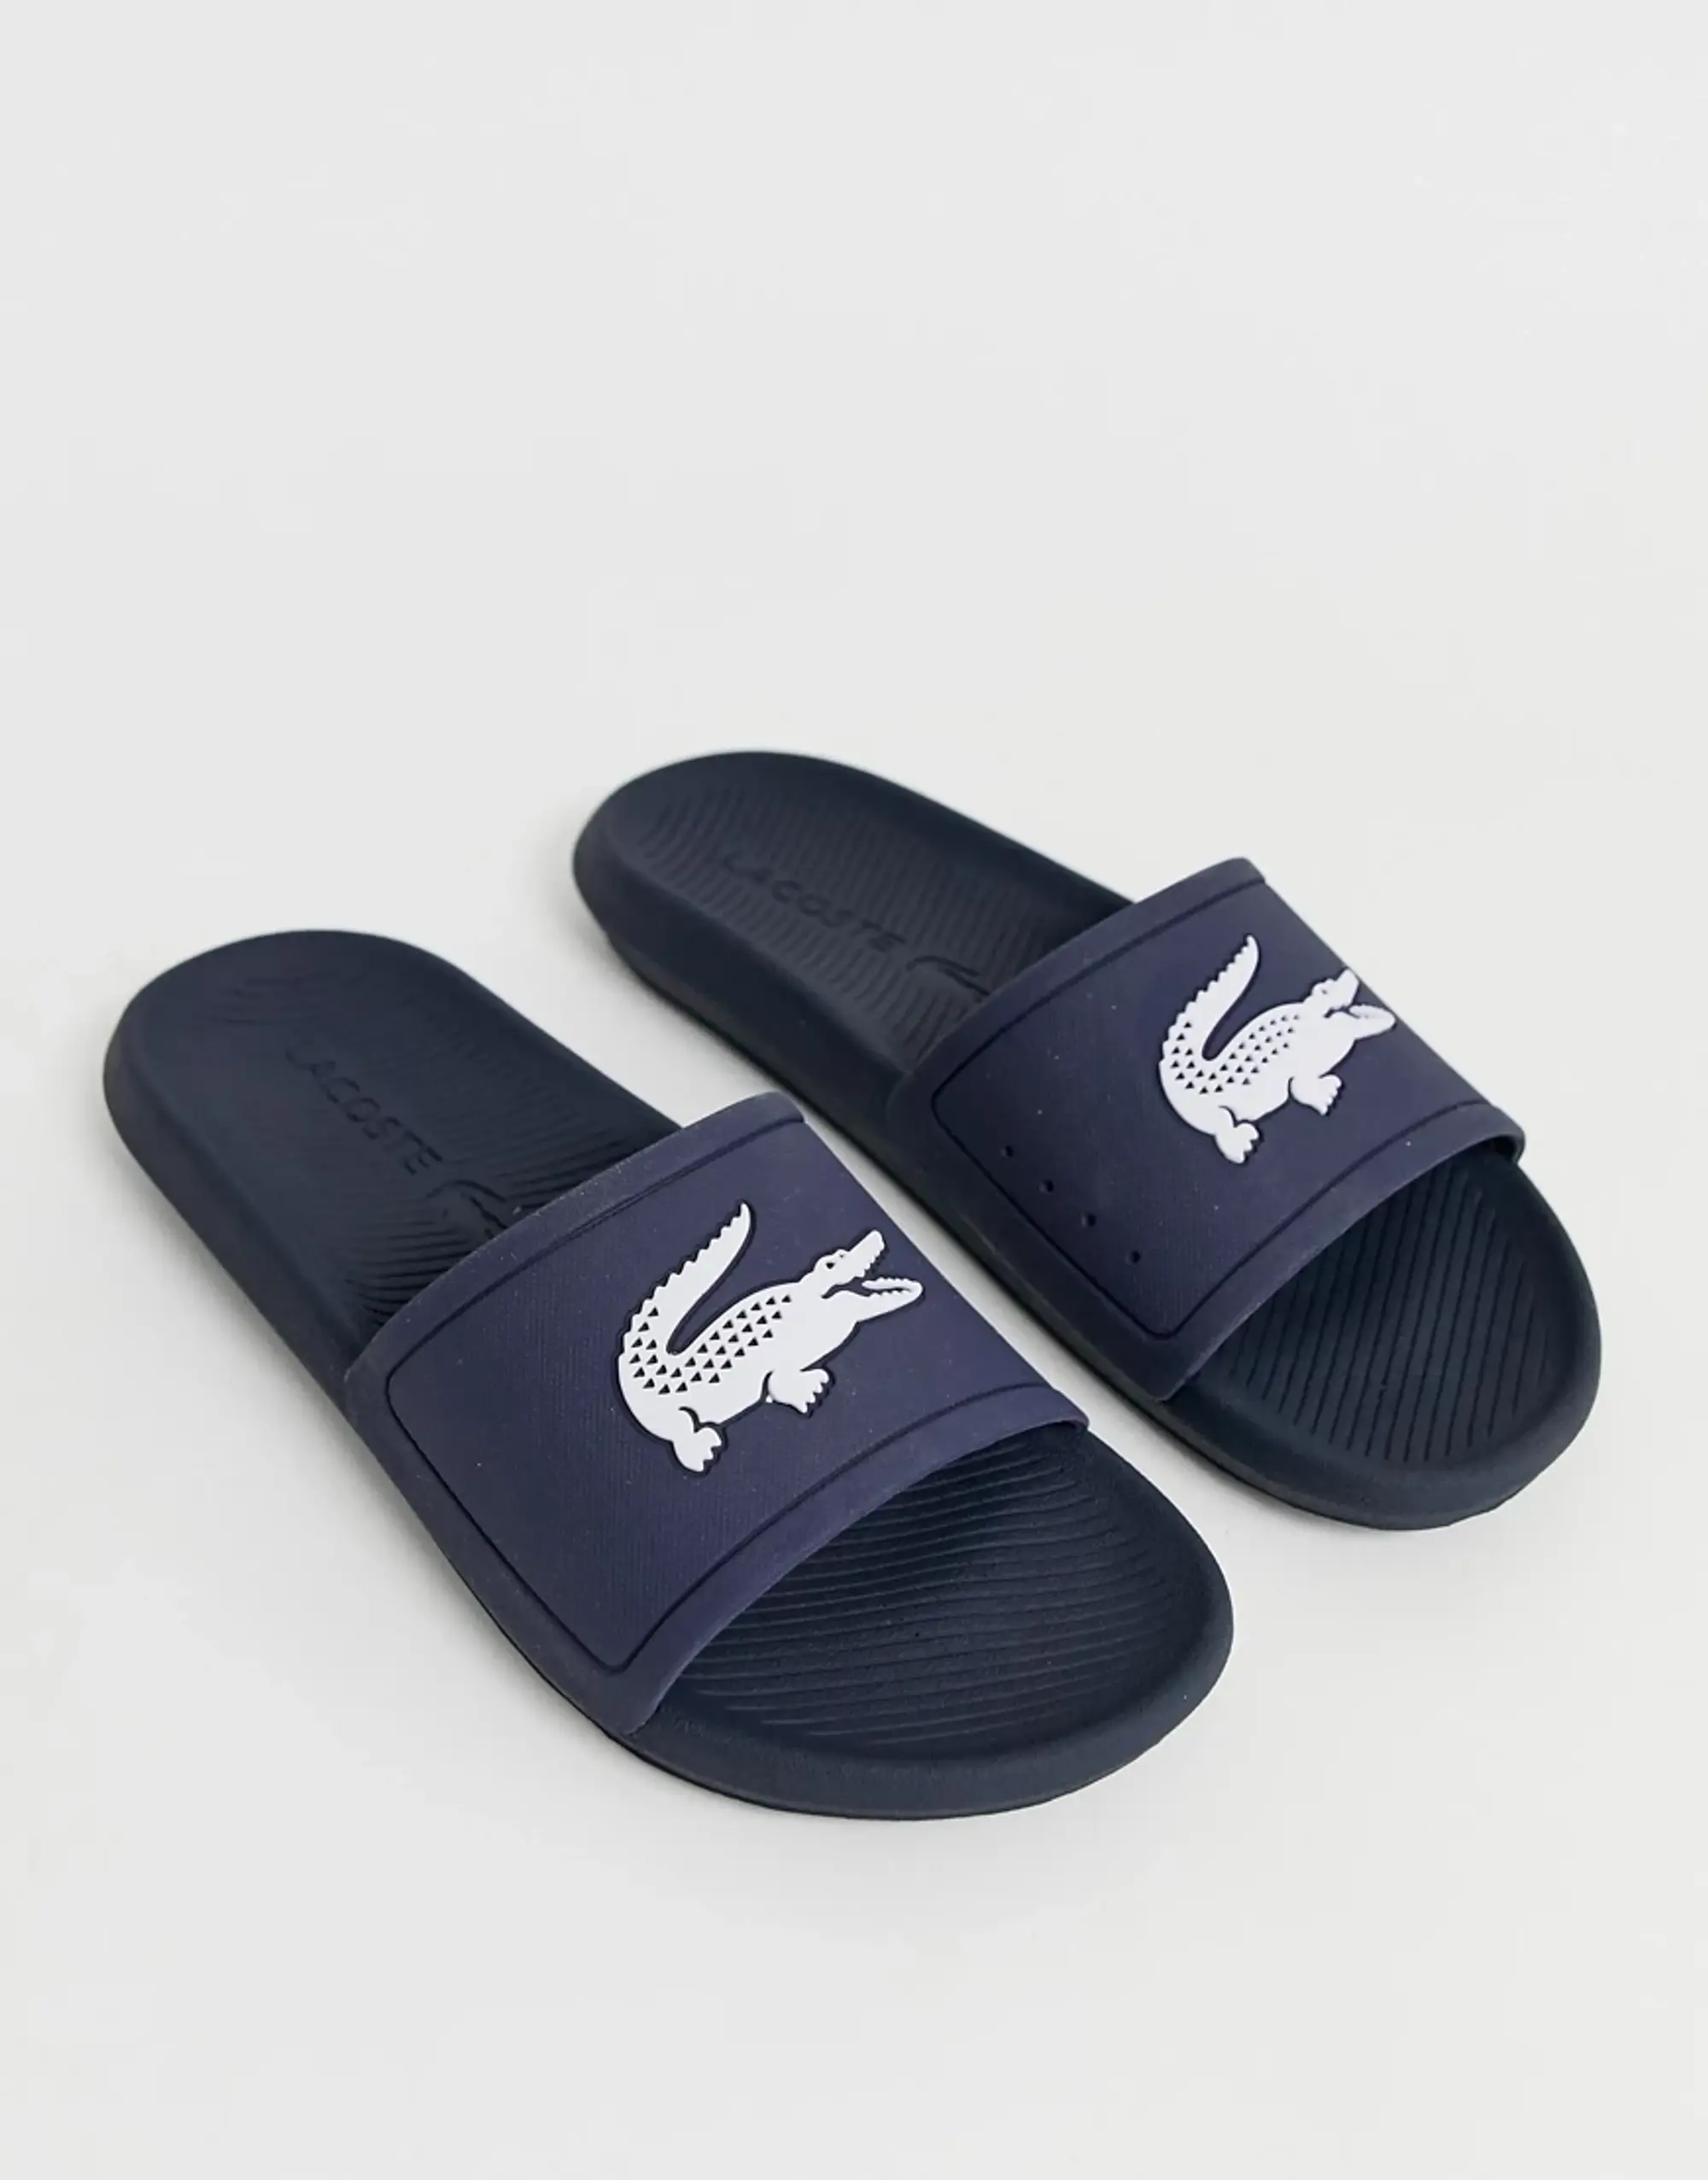 Lacoste croco slide sandals in navy & white